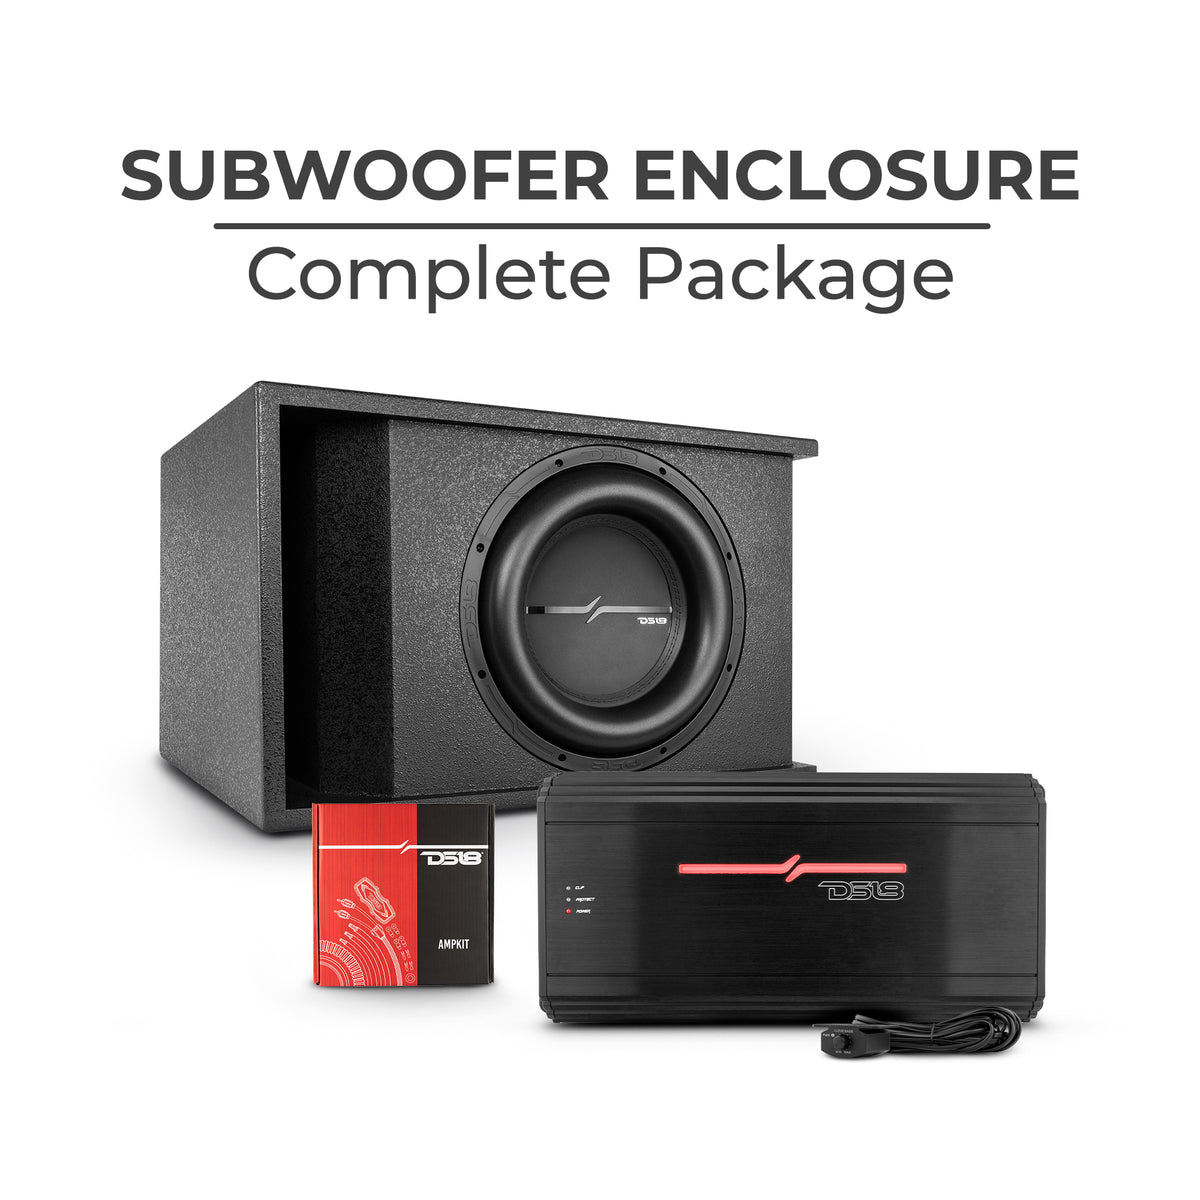 1 x 12" Subwoofer Enclosure Complete Package